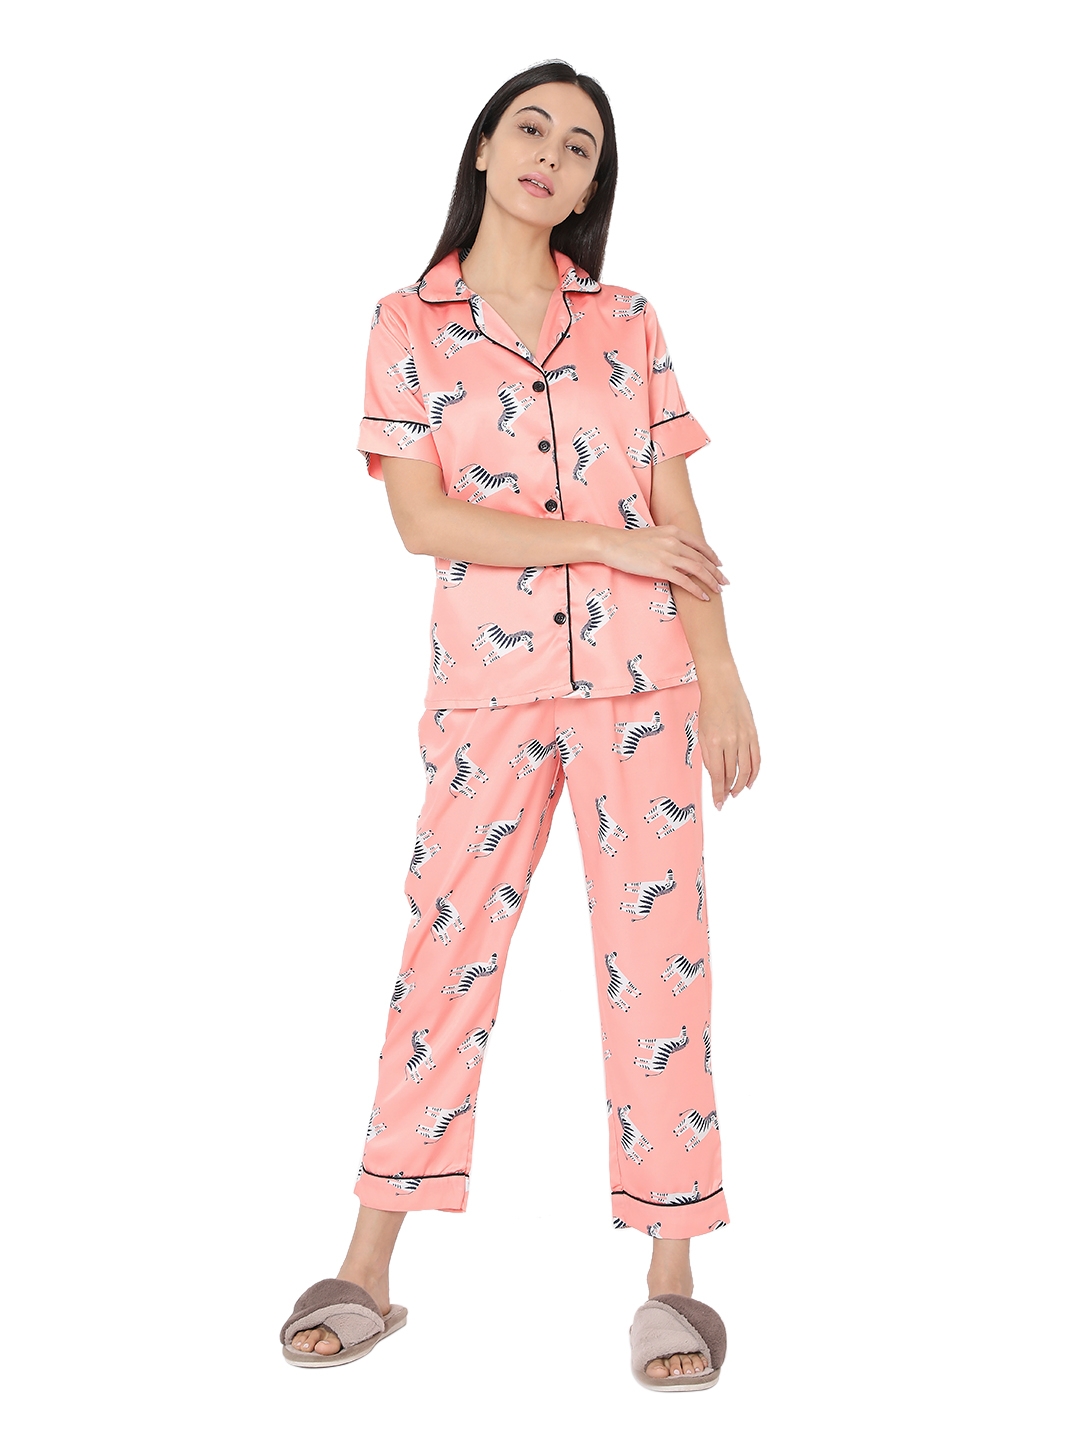 Smarty Pants | Smarty Pants Women's Silk Satin Peach Color Zebra Print Night Suit.